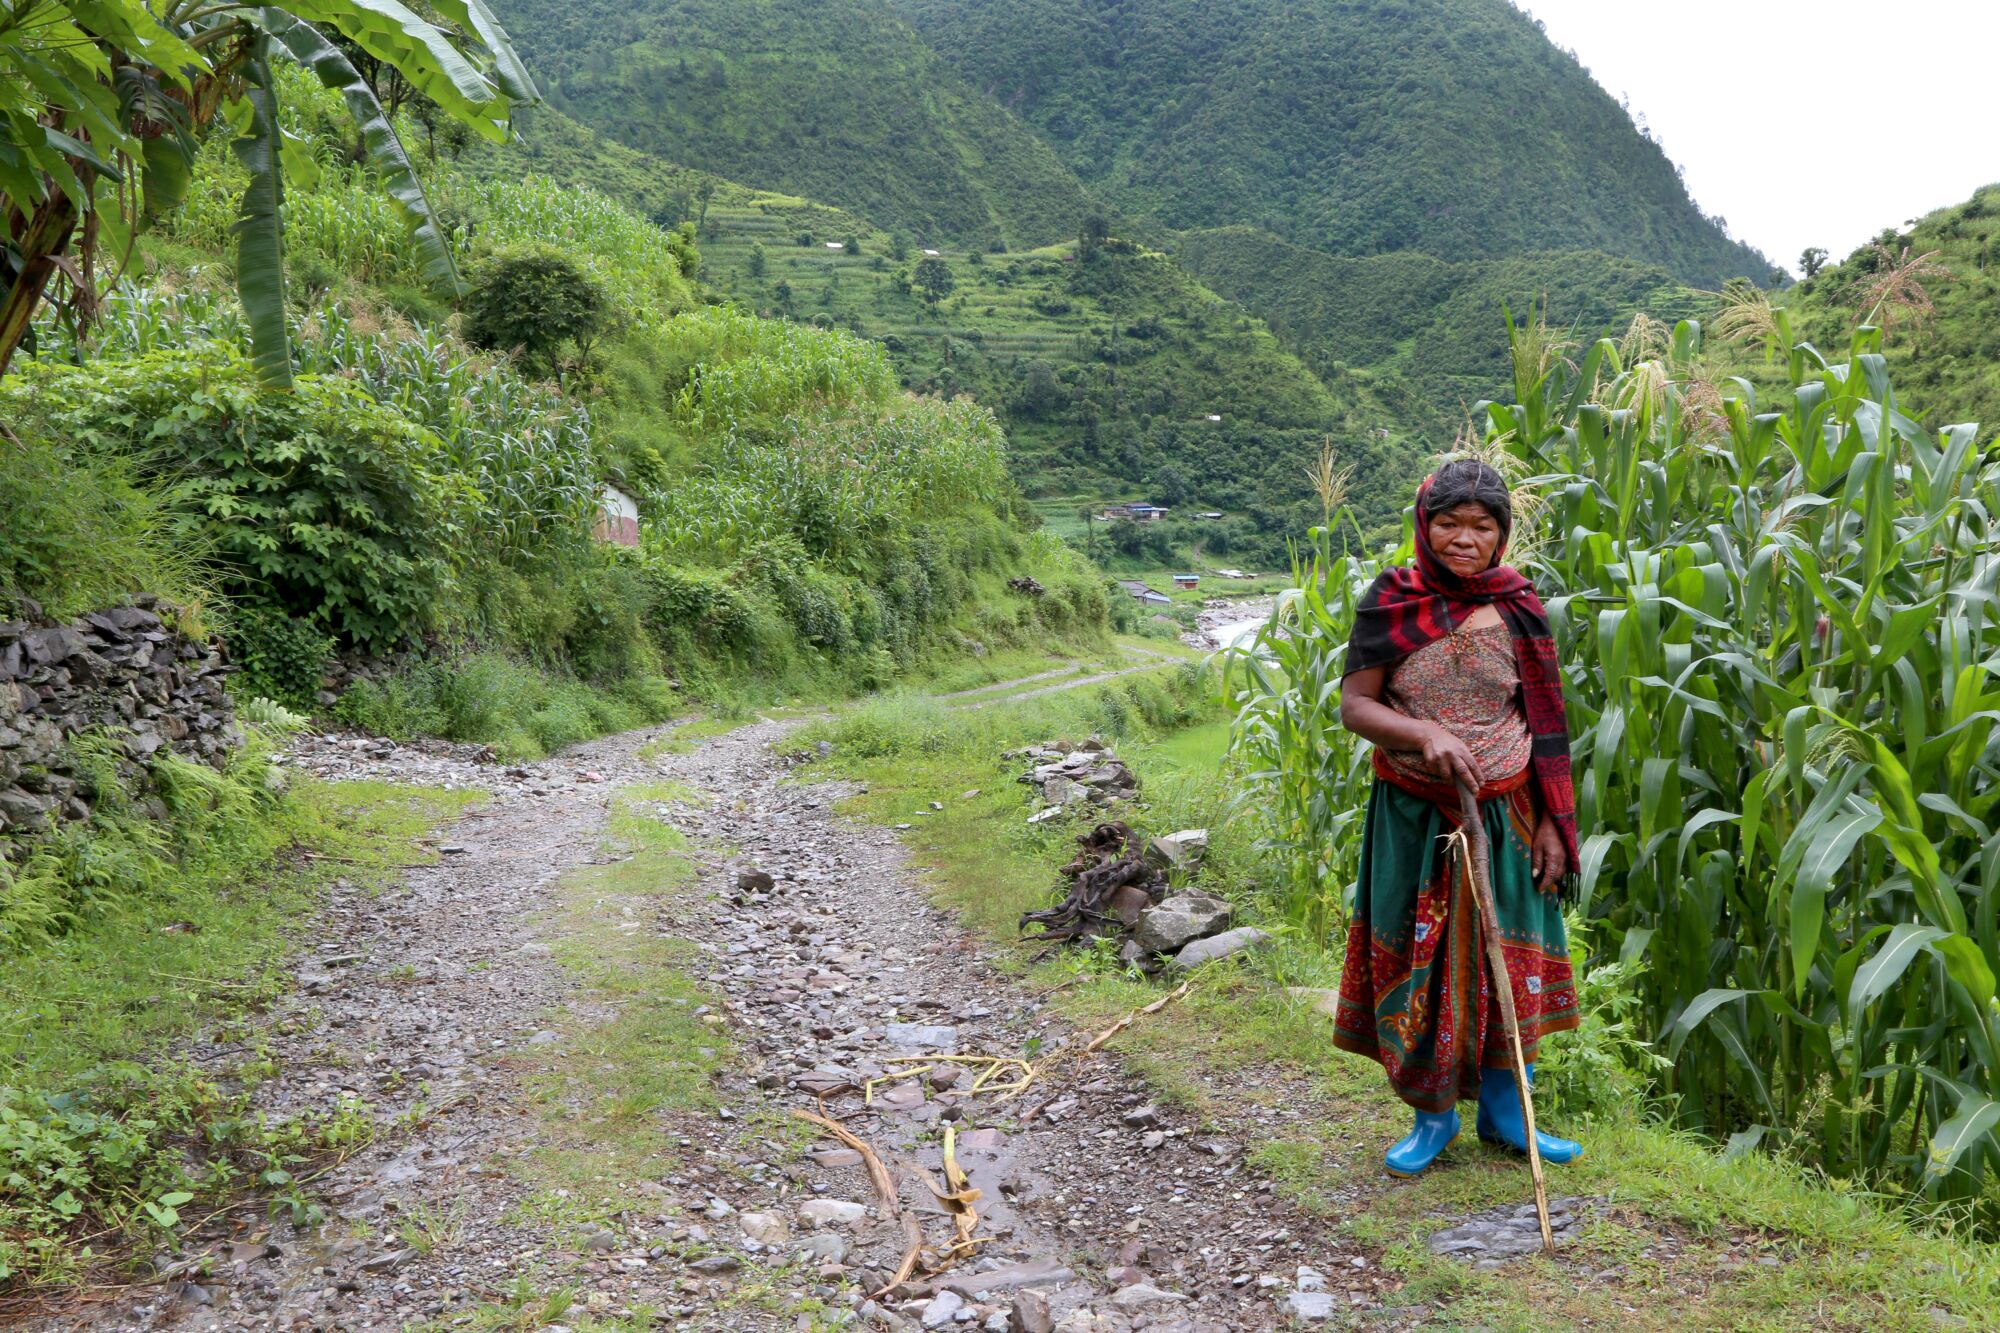 Subitra Bhandari, who is now 74 years old, prepares to walk toward the nearest town outside Adhikarichaur, Nepal.